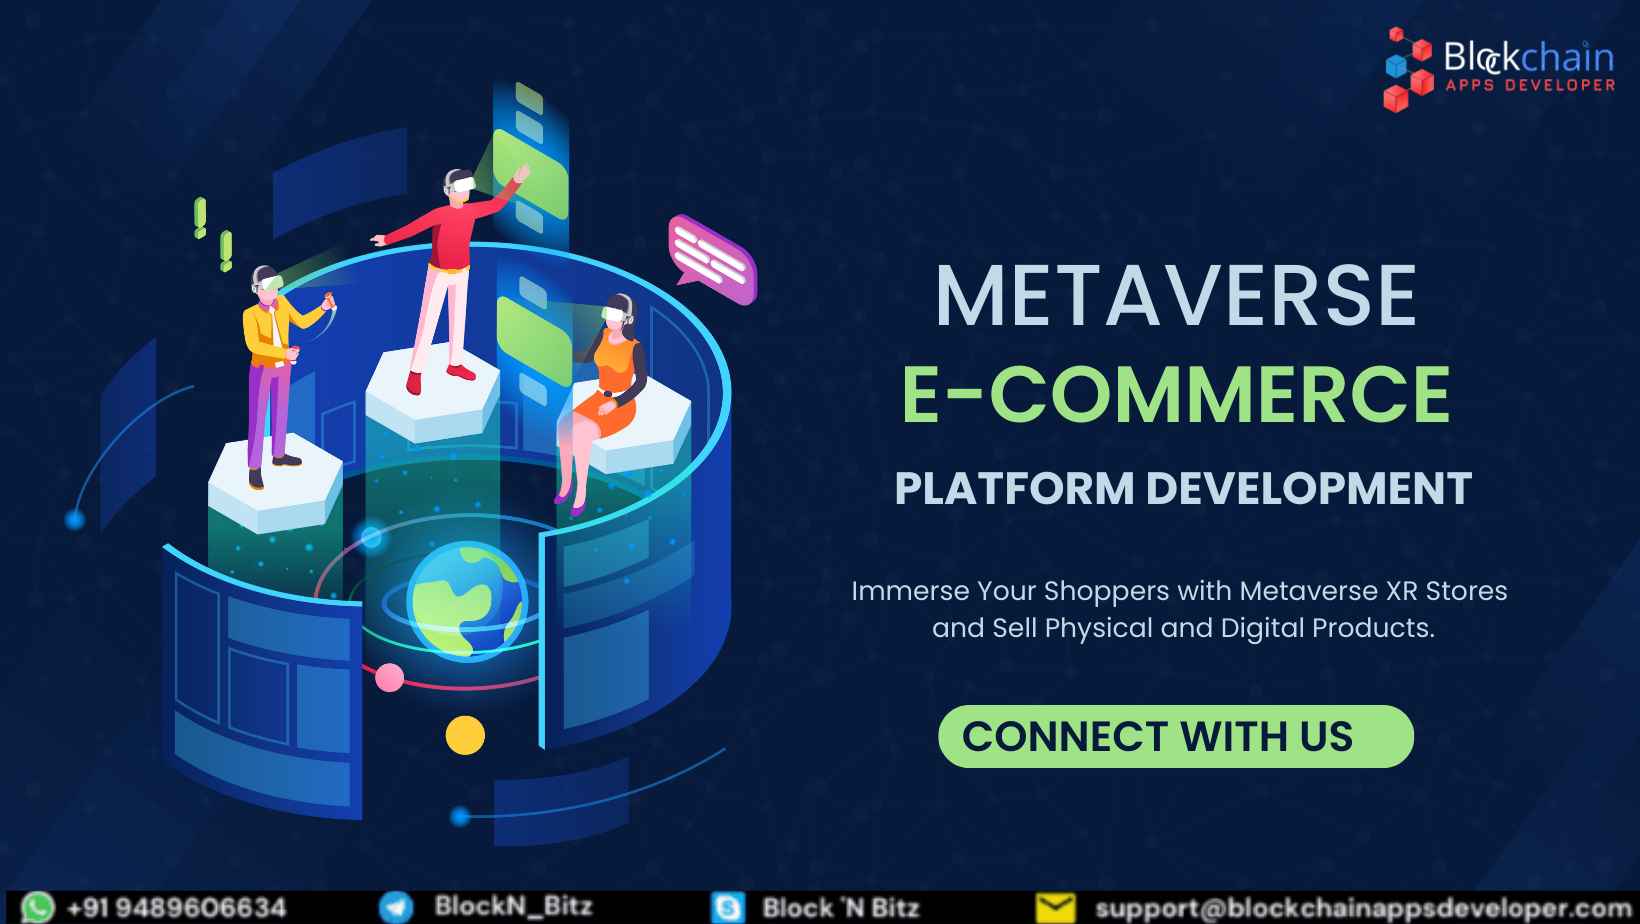 How to Build Metaverse Ecommerce Platform?